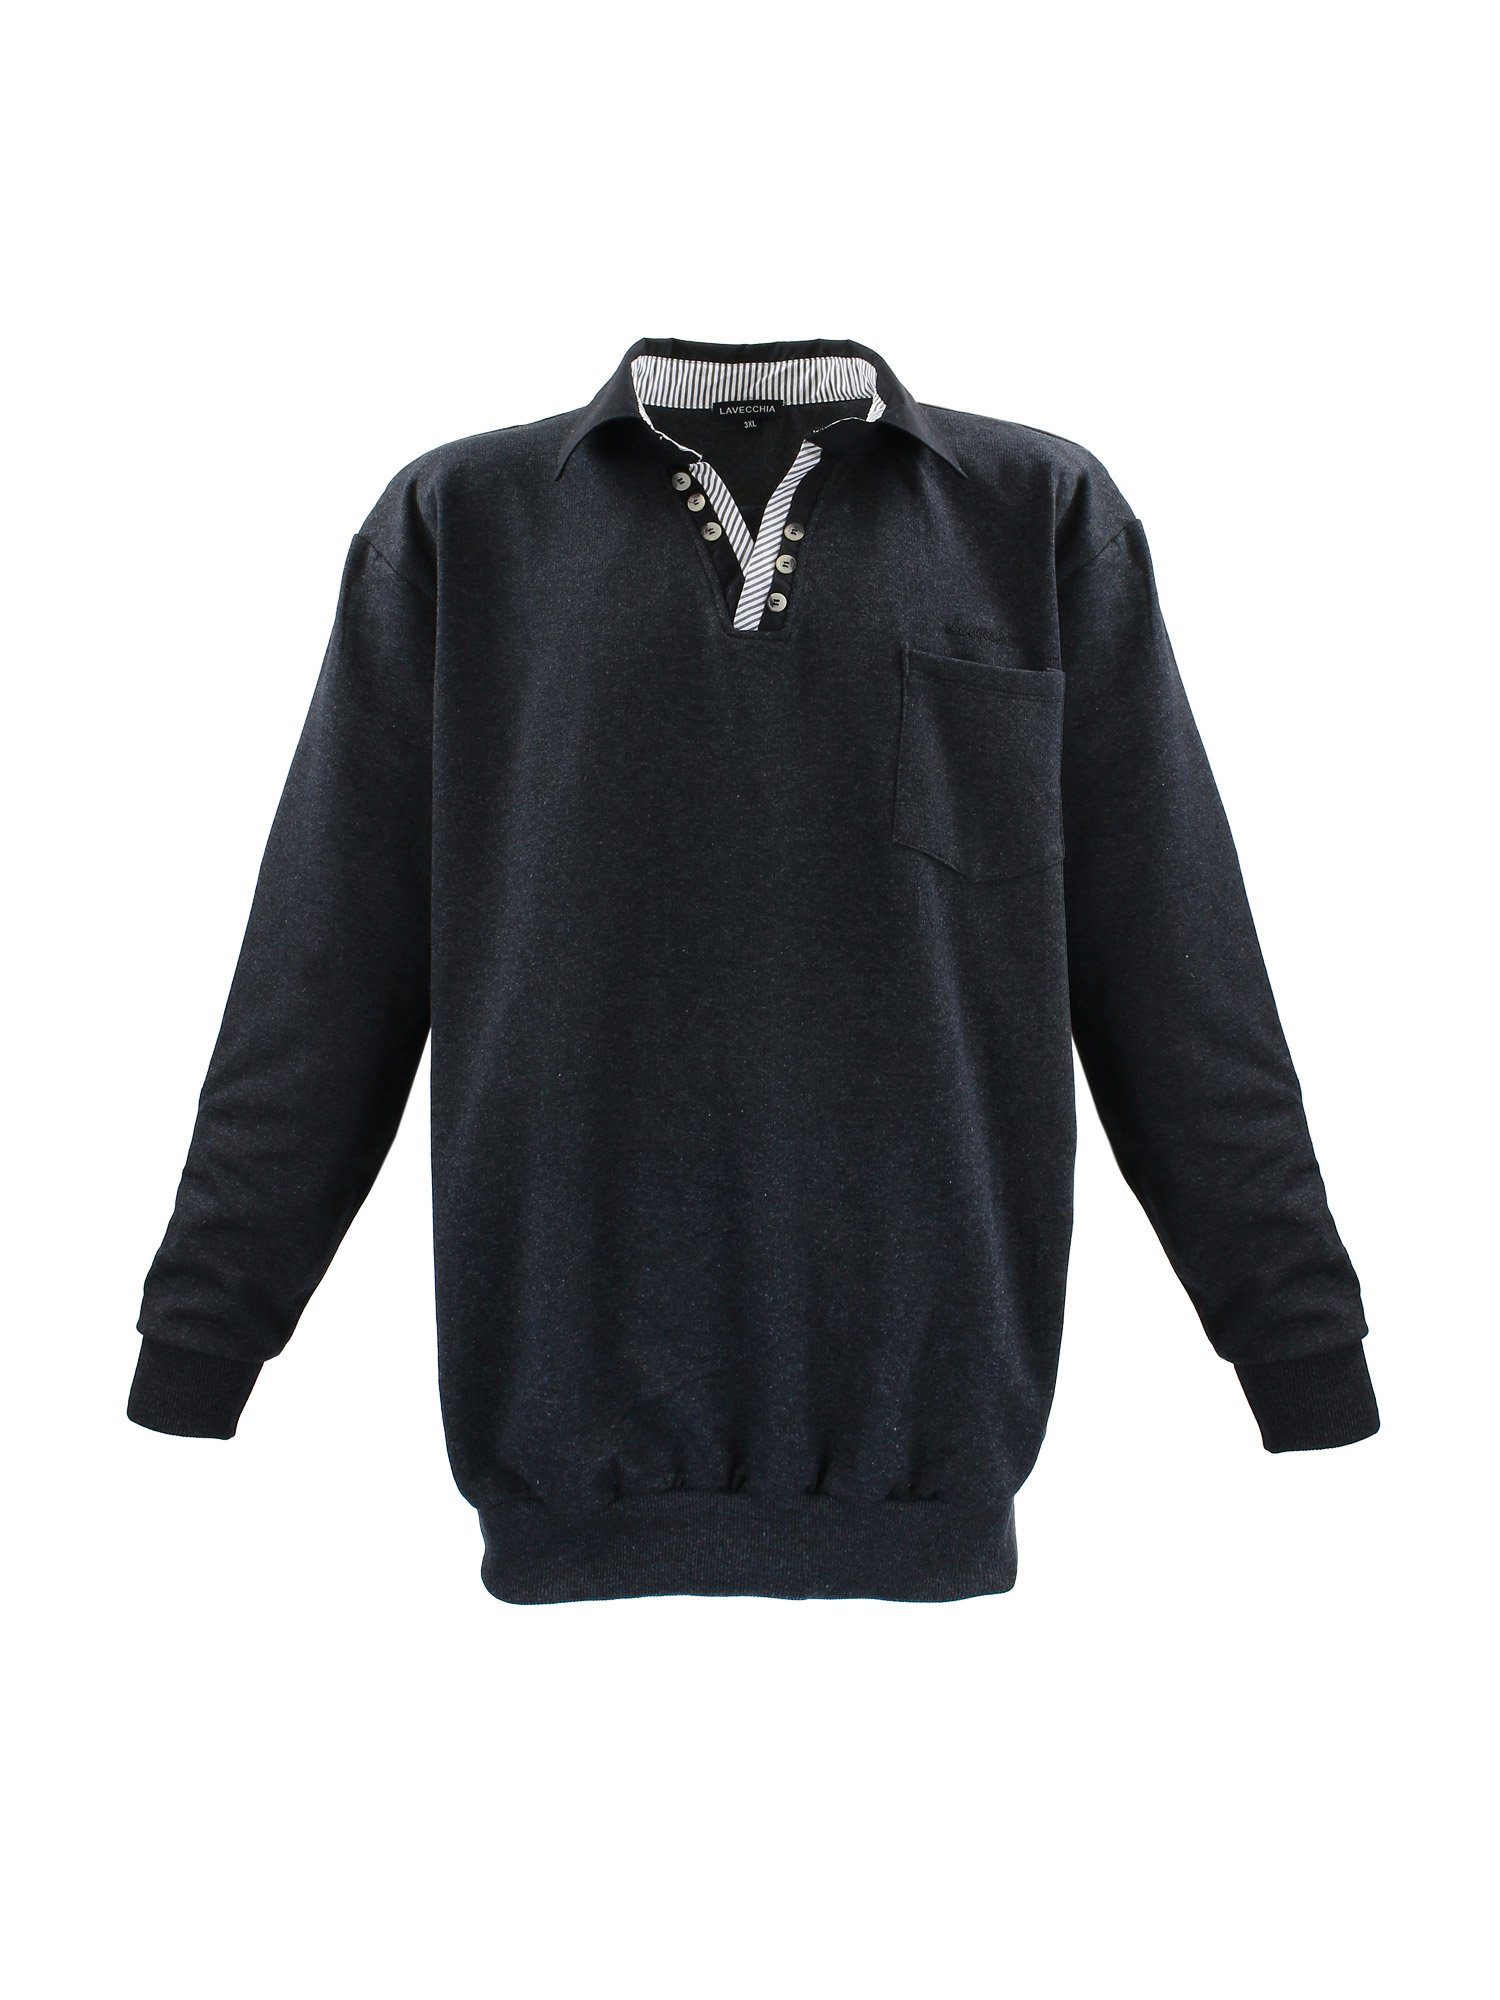 Lavecchia Sweatshirt Übergrößen Sweater LV-602 Polo Langarmshirt anthrazit